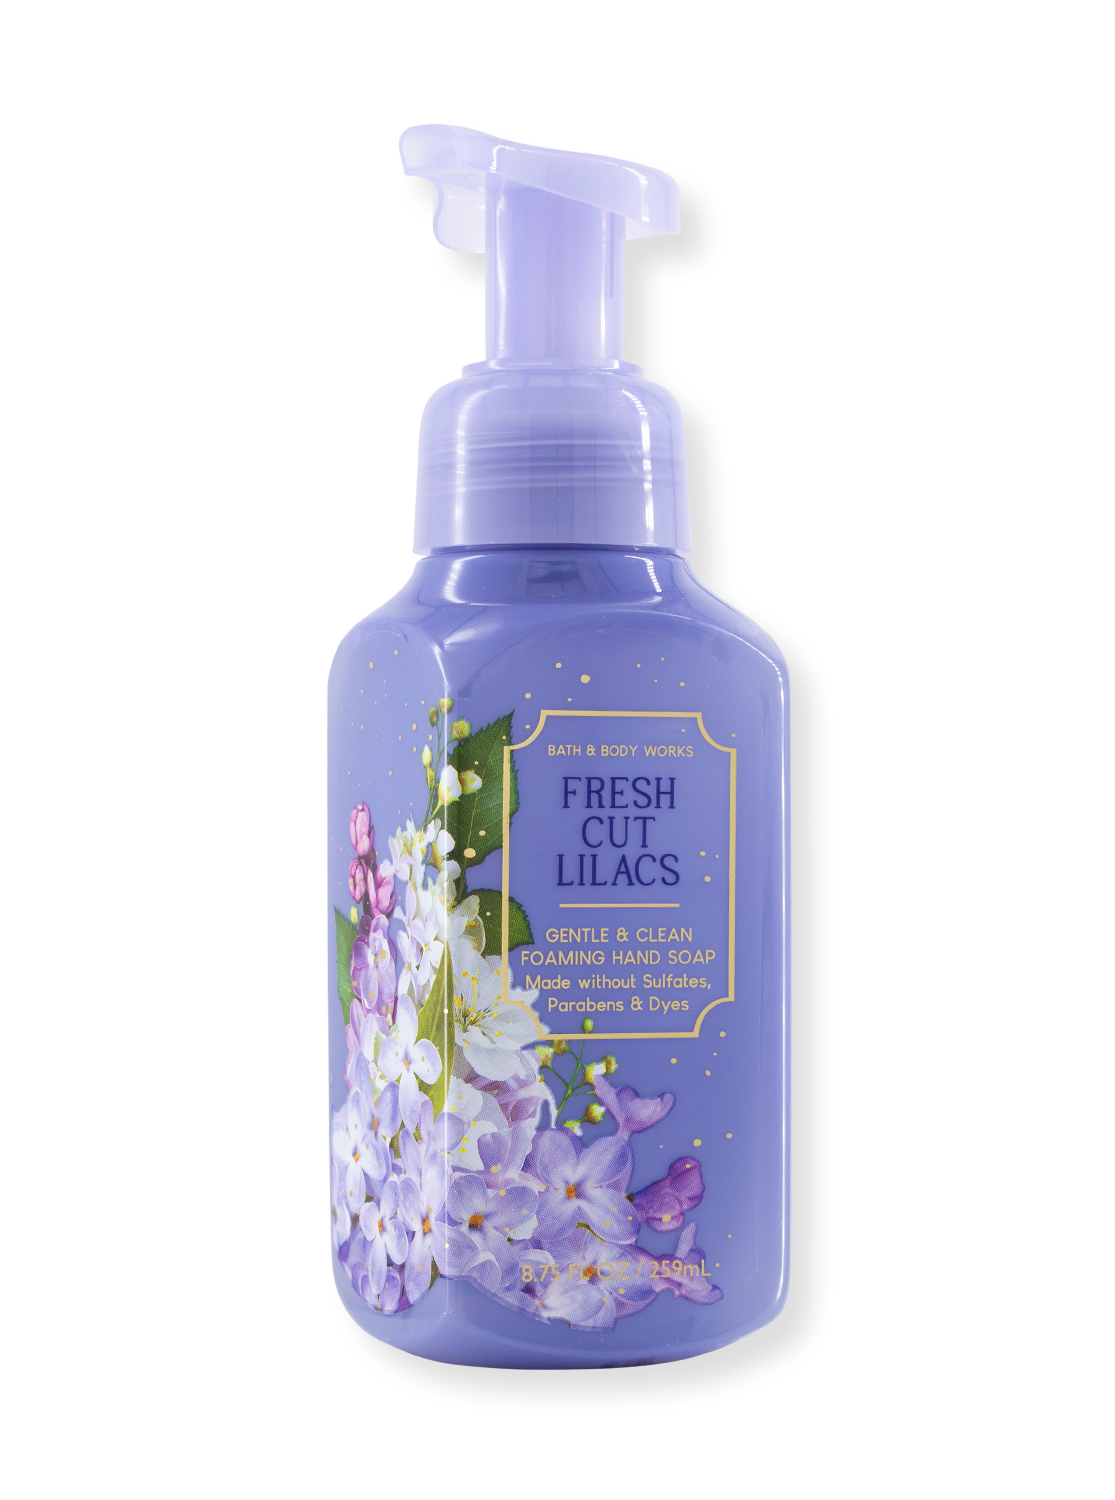 Foam soap - Fresh cut Lilacs - 259ml